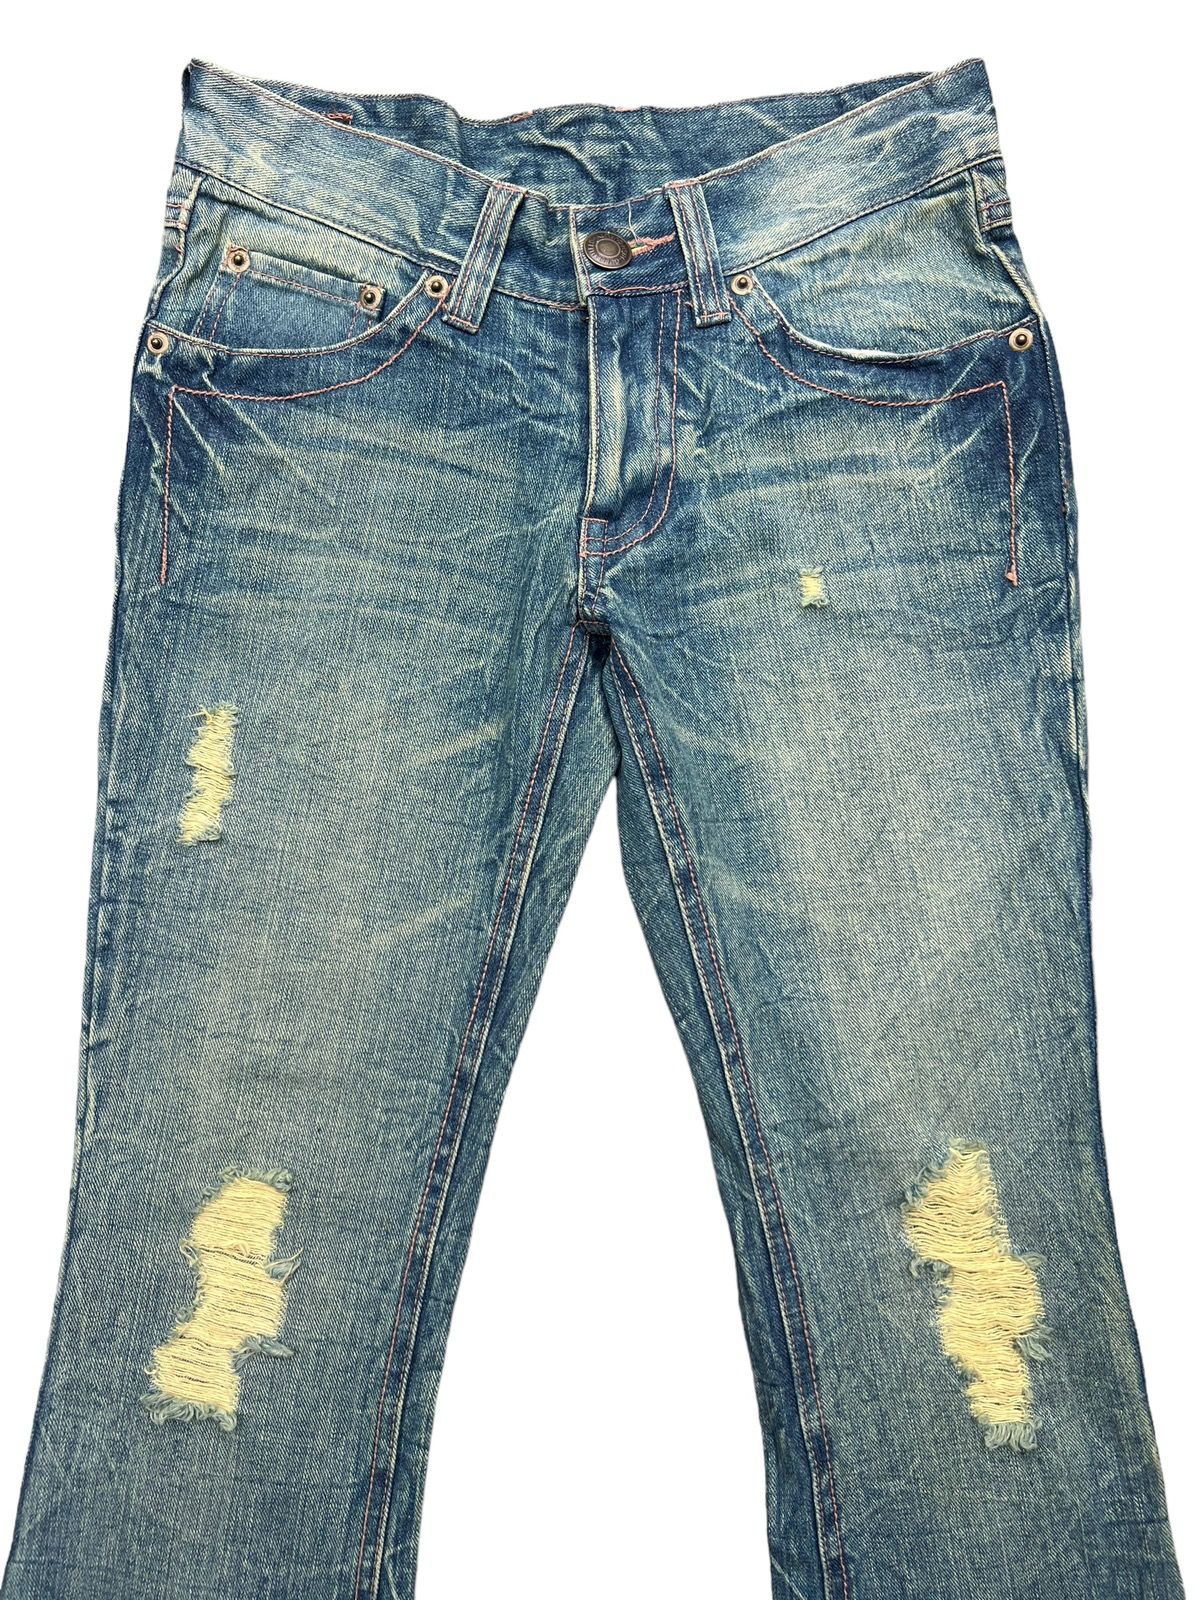 Hype - Japanese Brand Distressed Mudwash Flare Denim Jeans 28x30.5 - 4